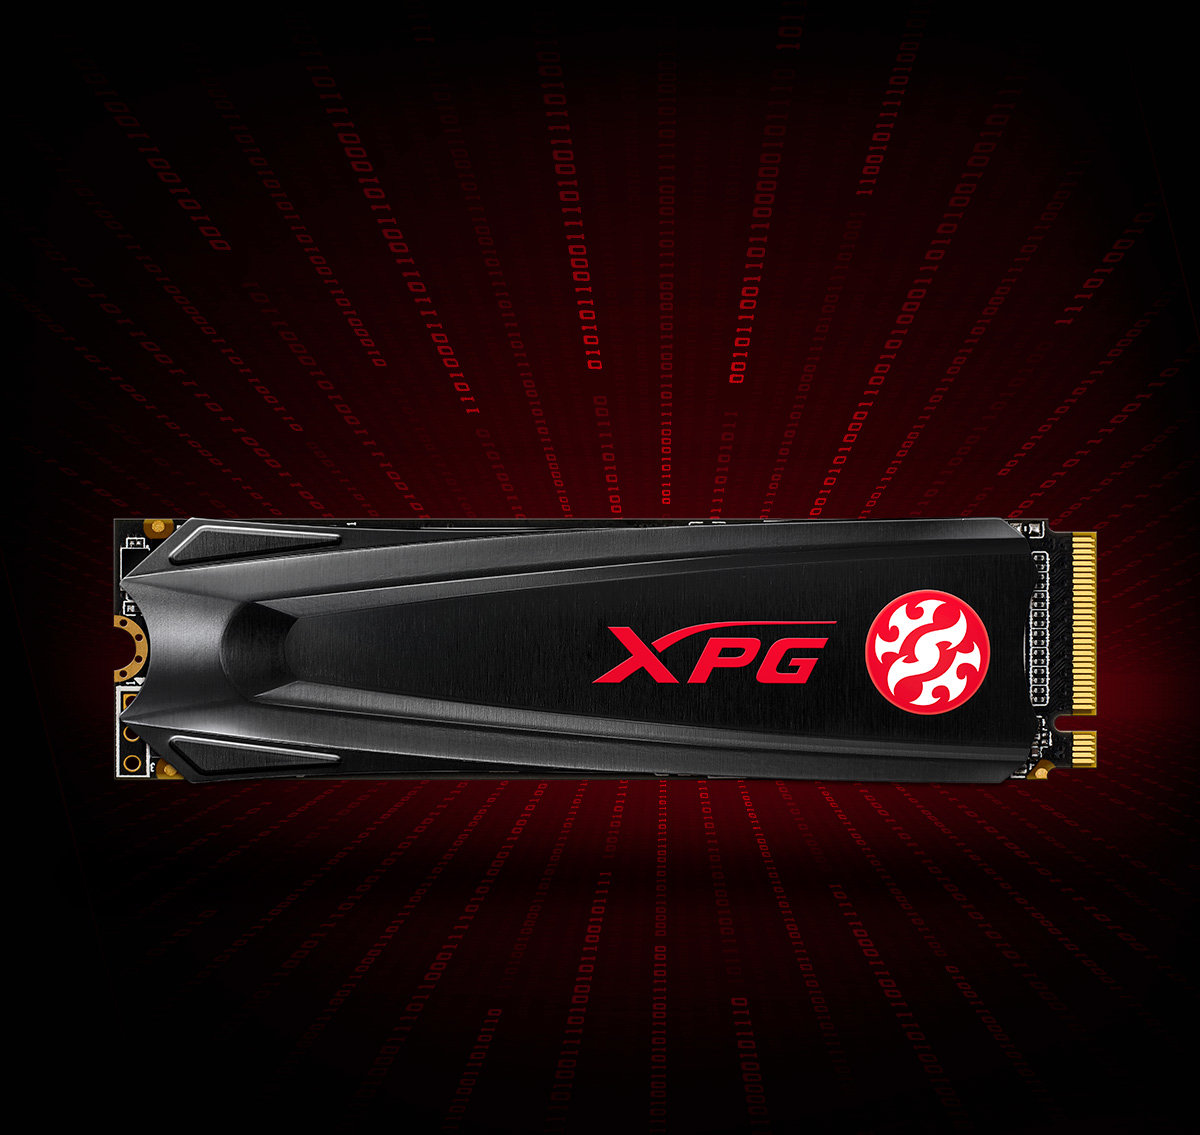 Dysk SSD Adata XPG GAMMIX S5 M.2 256GB AGAMMIXS5-256GT-C widok na dysk od przodu